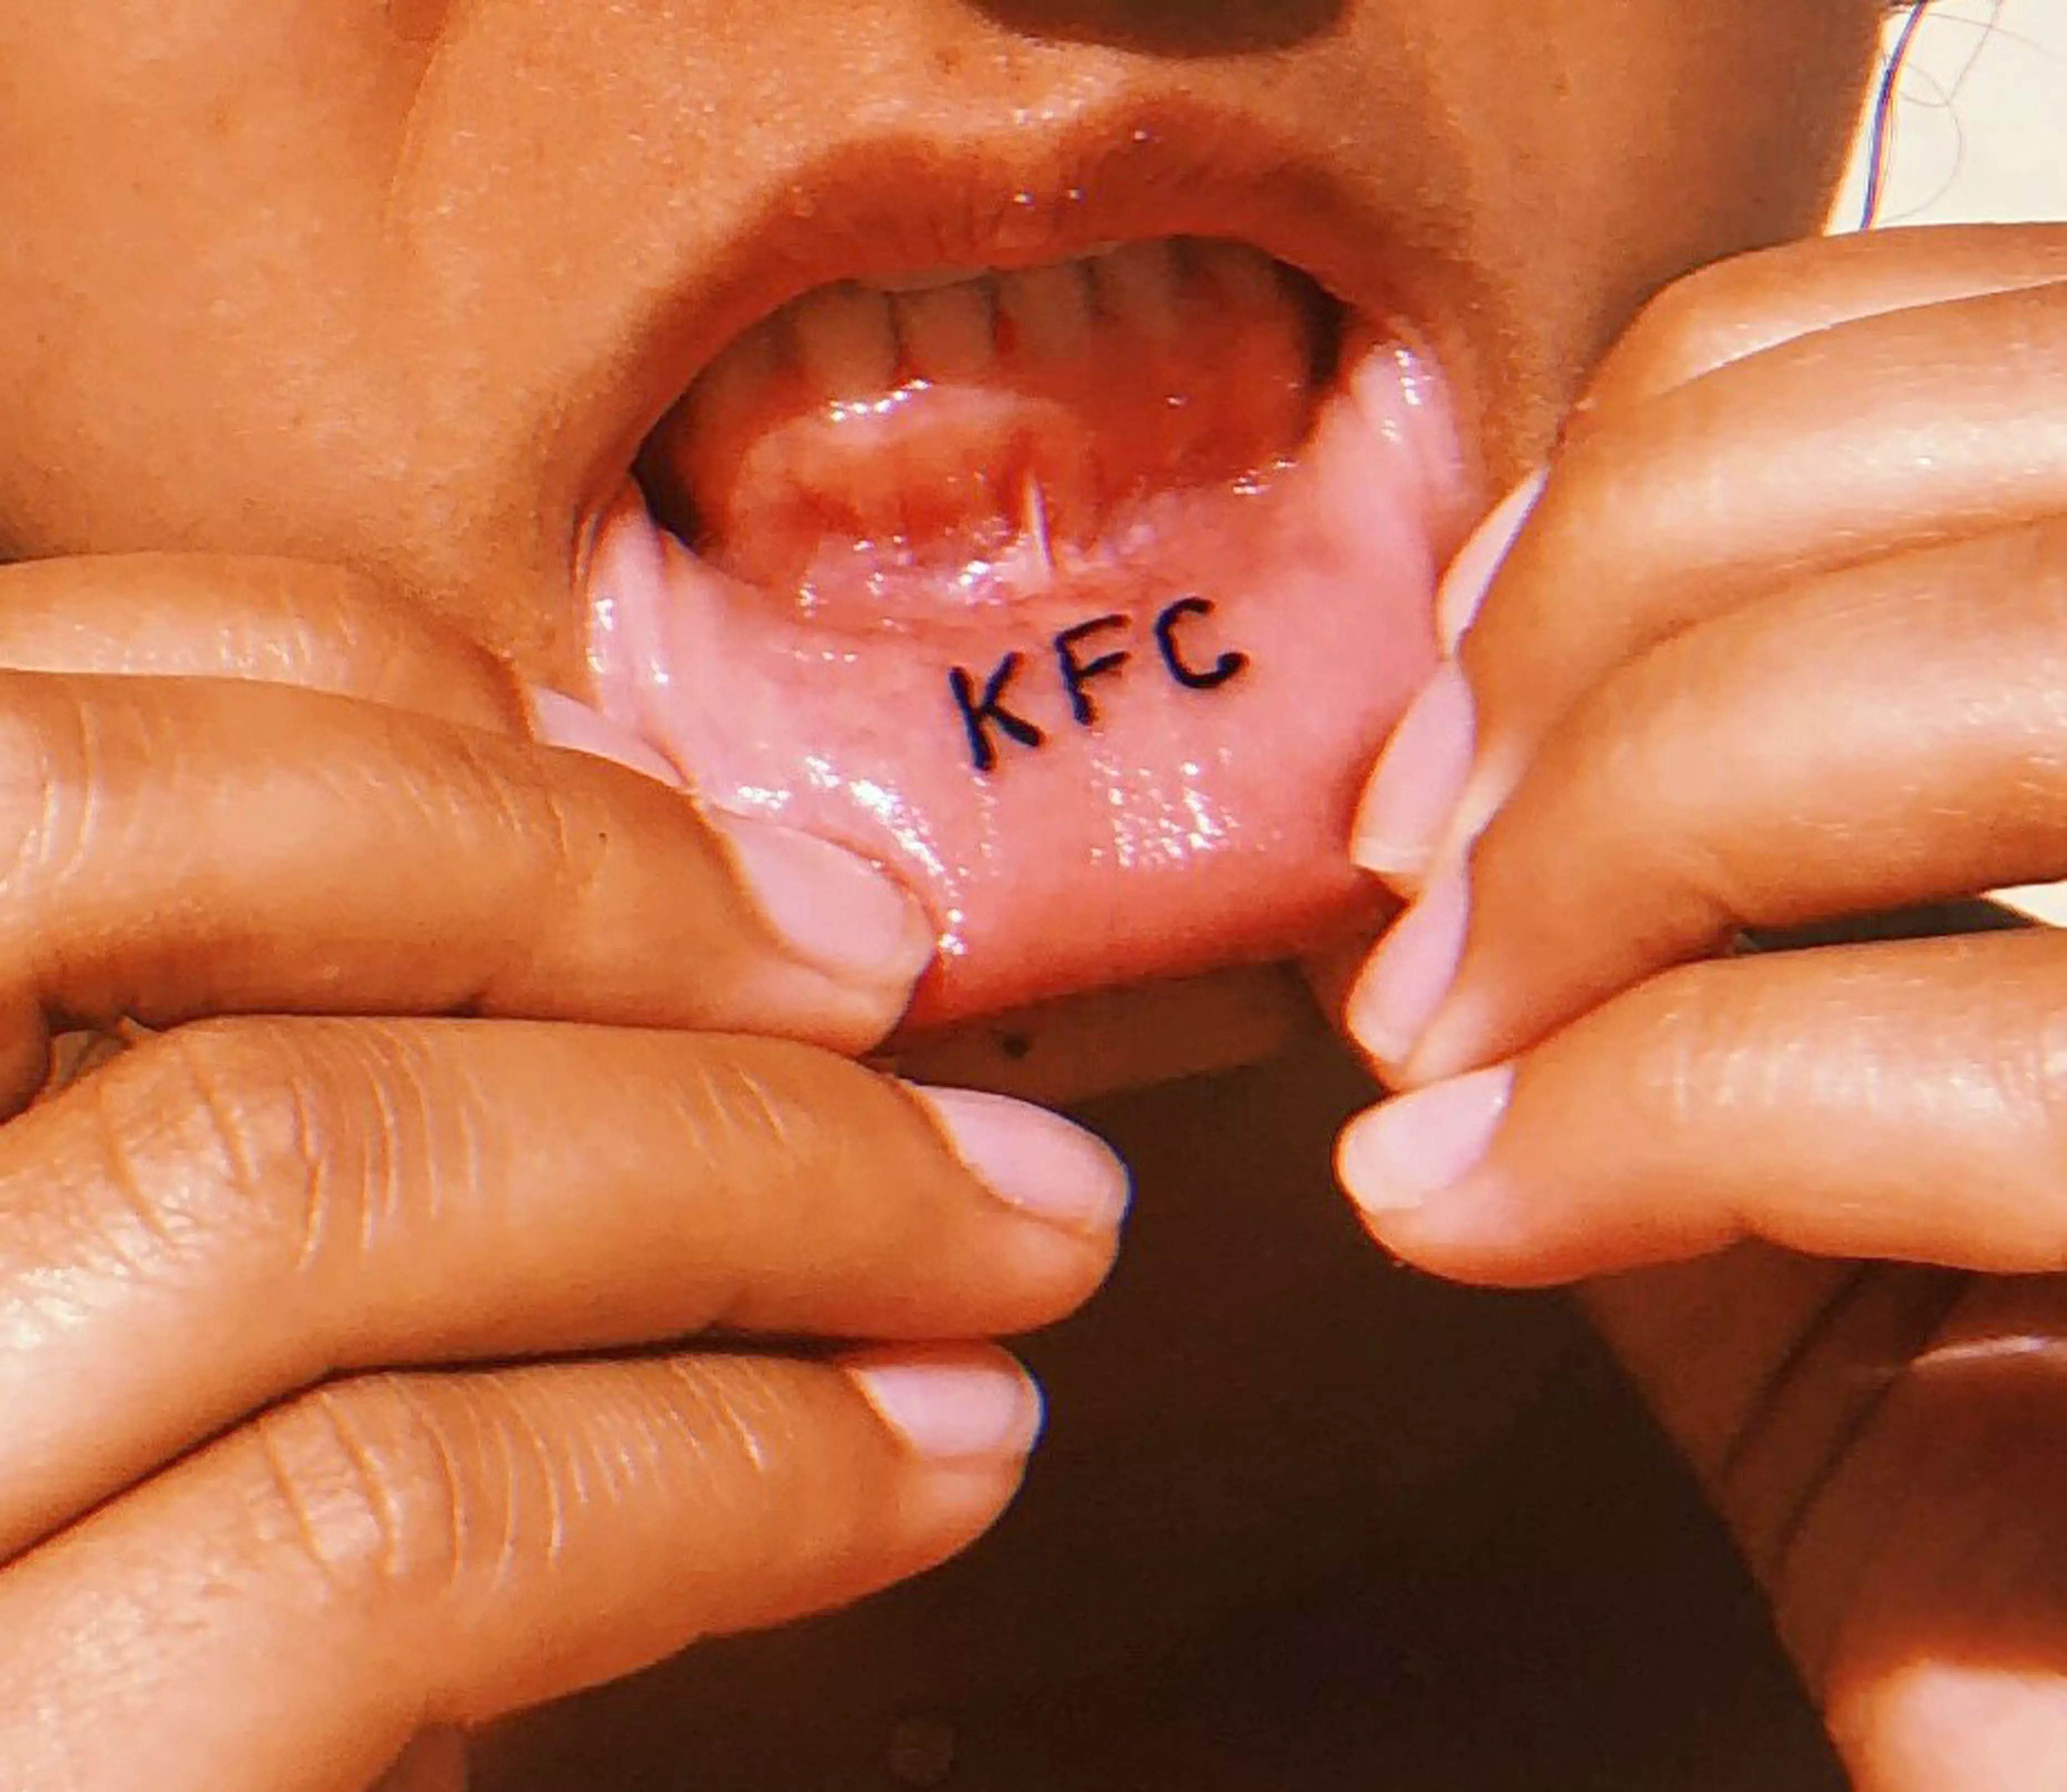 Tabatha Andrade got 'KFC' tattooed on her lip.